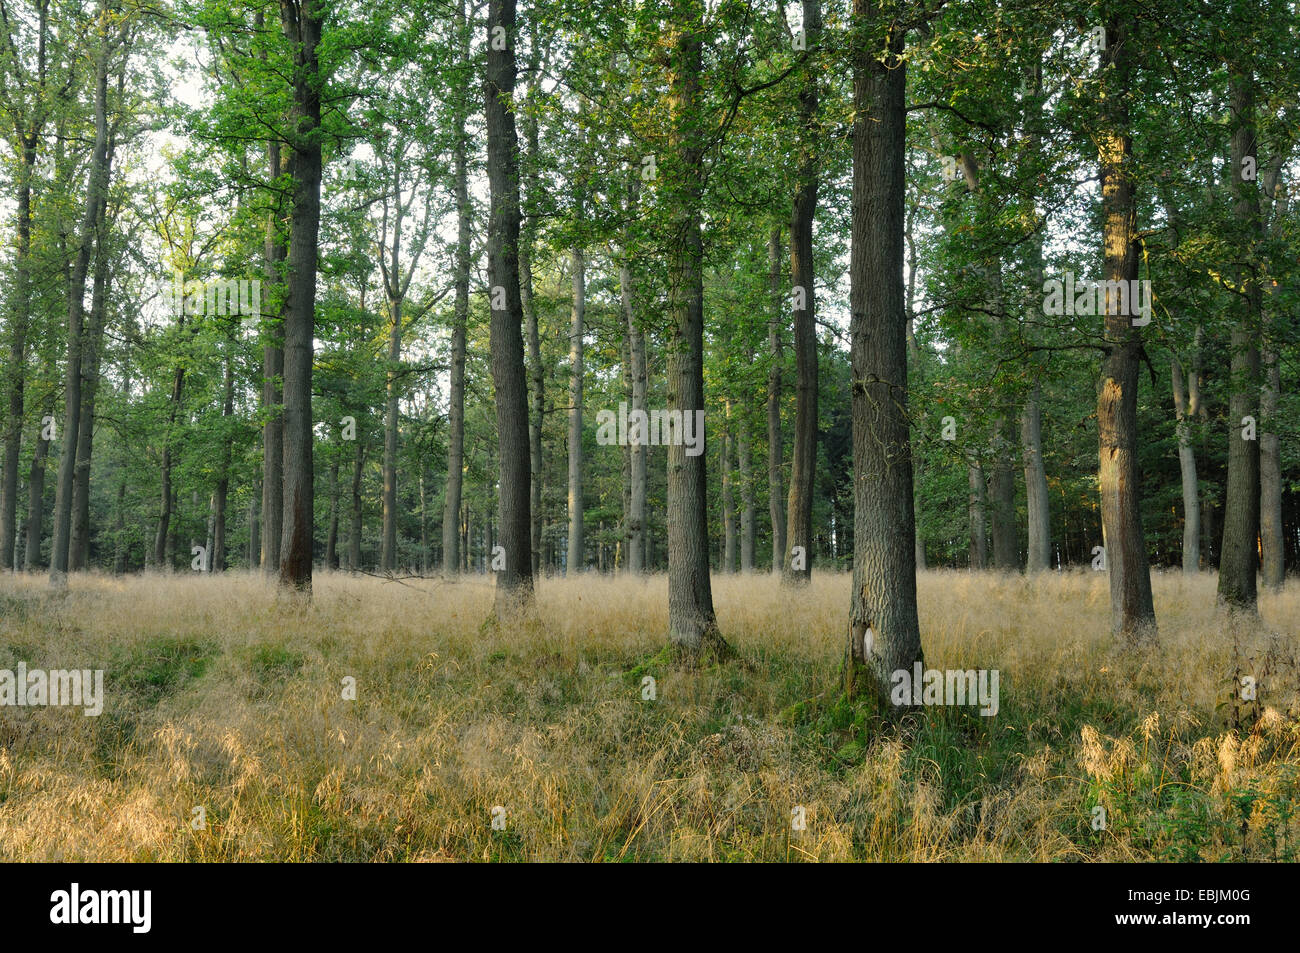 tufted hair-grass (Deschampsia cespitosa), in an oak forest, Germany Stock Photo